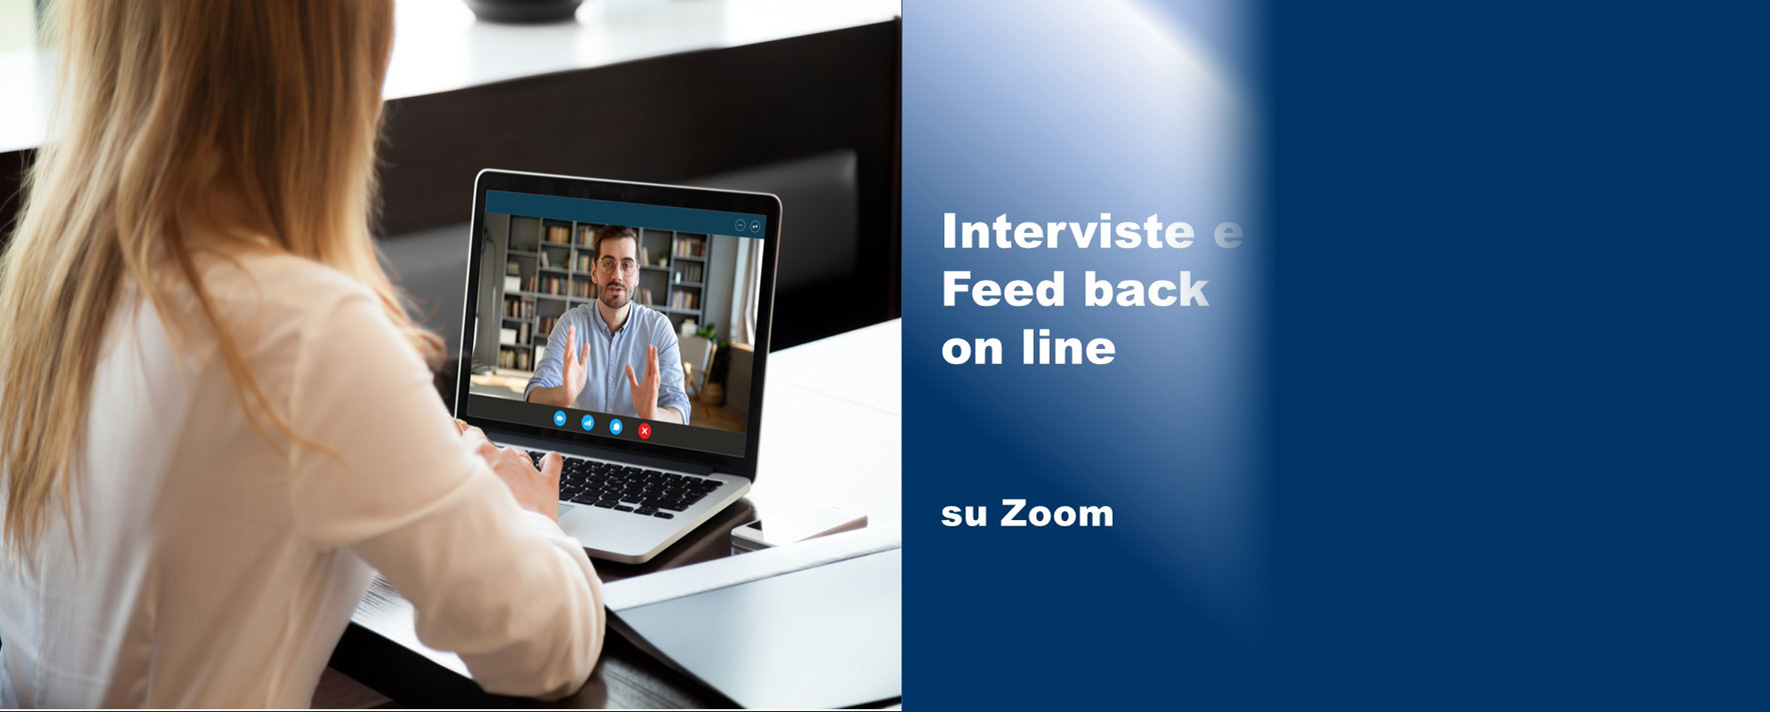 interviste e feed back on line